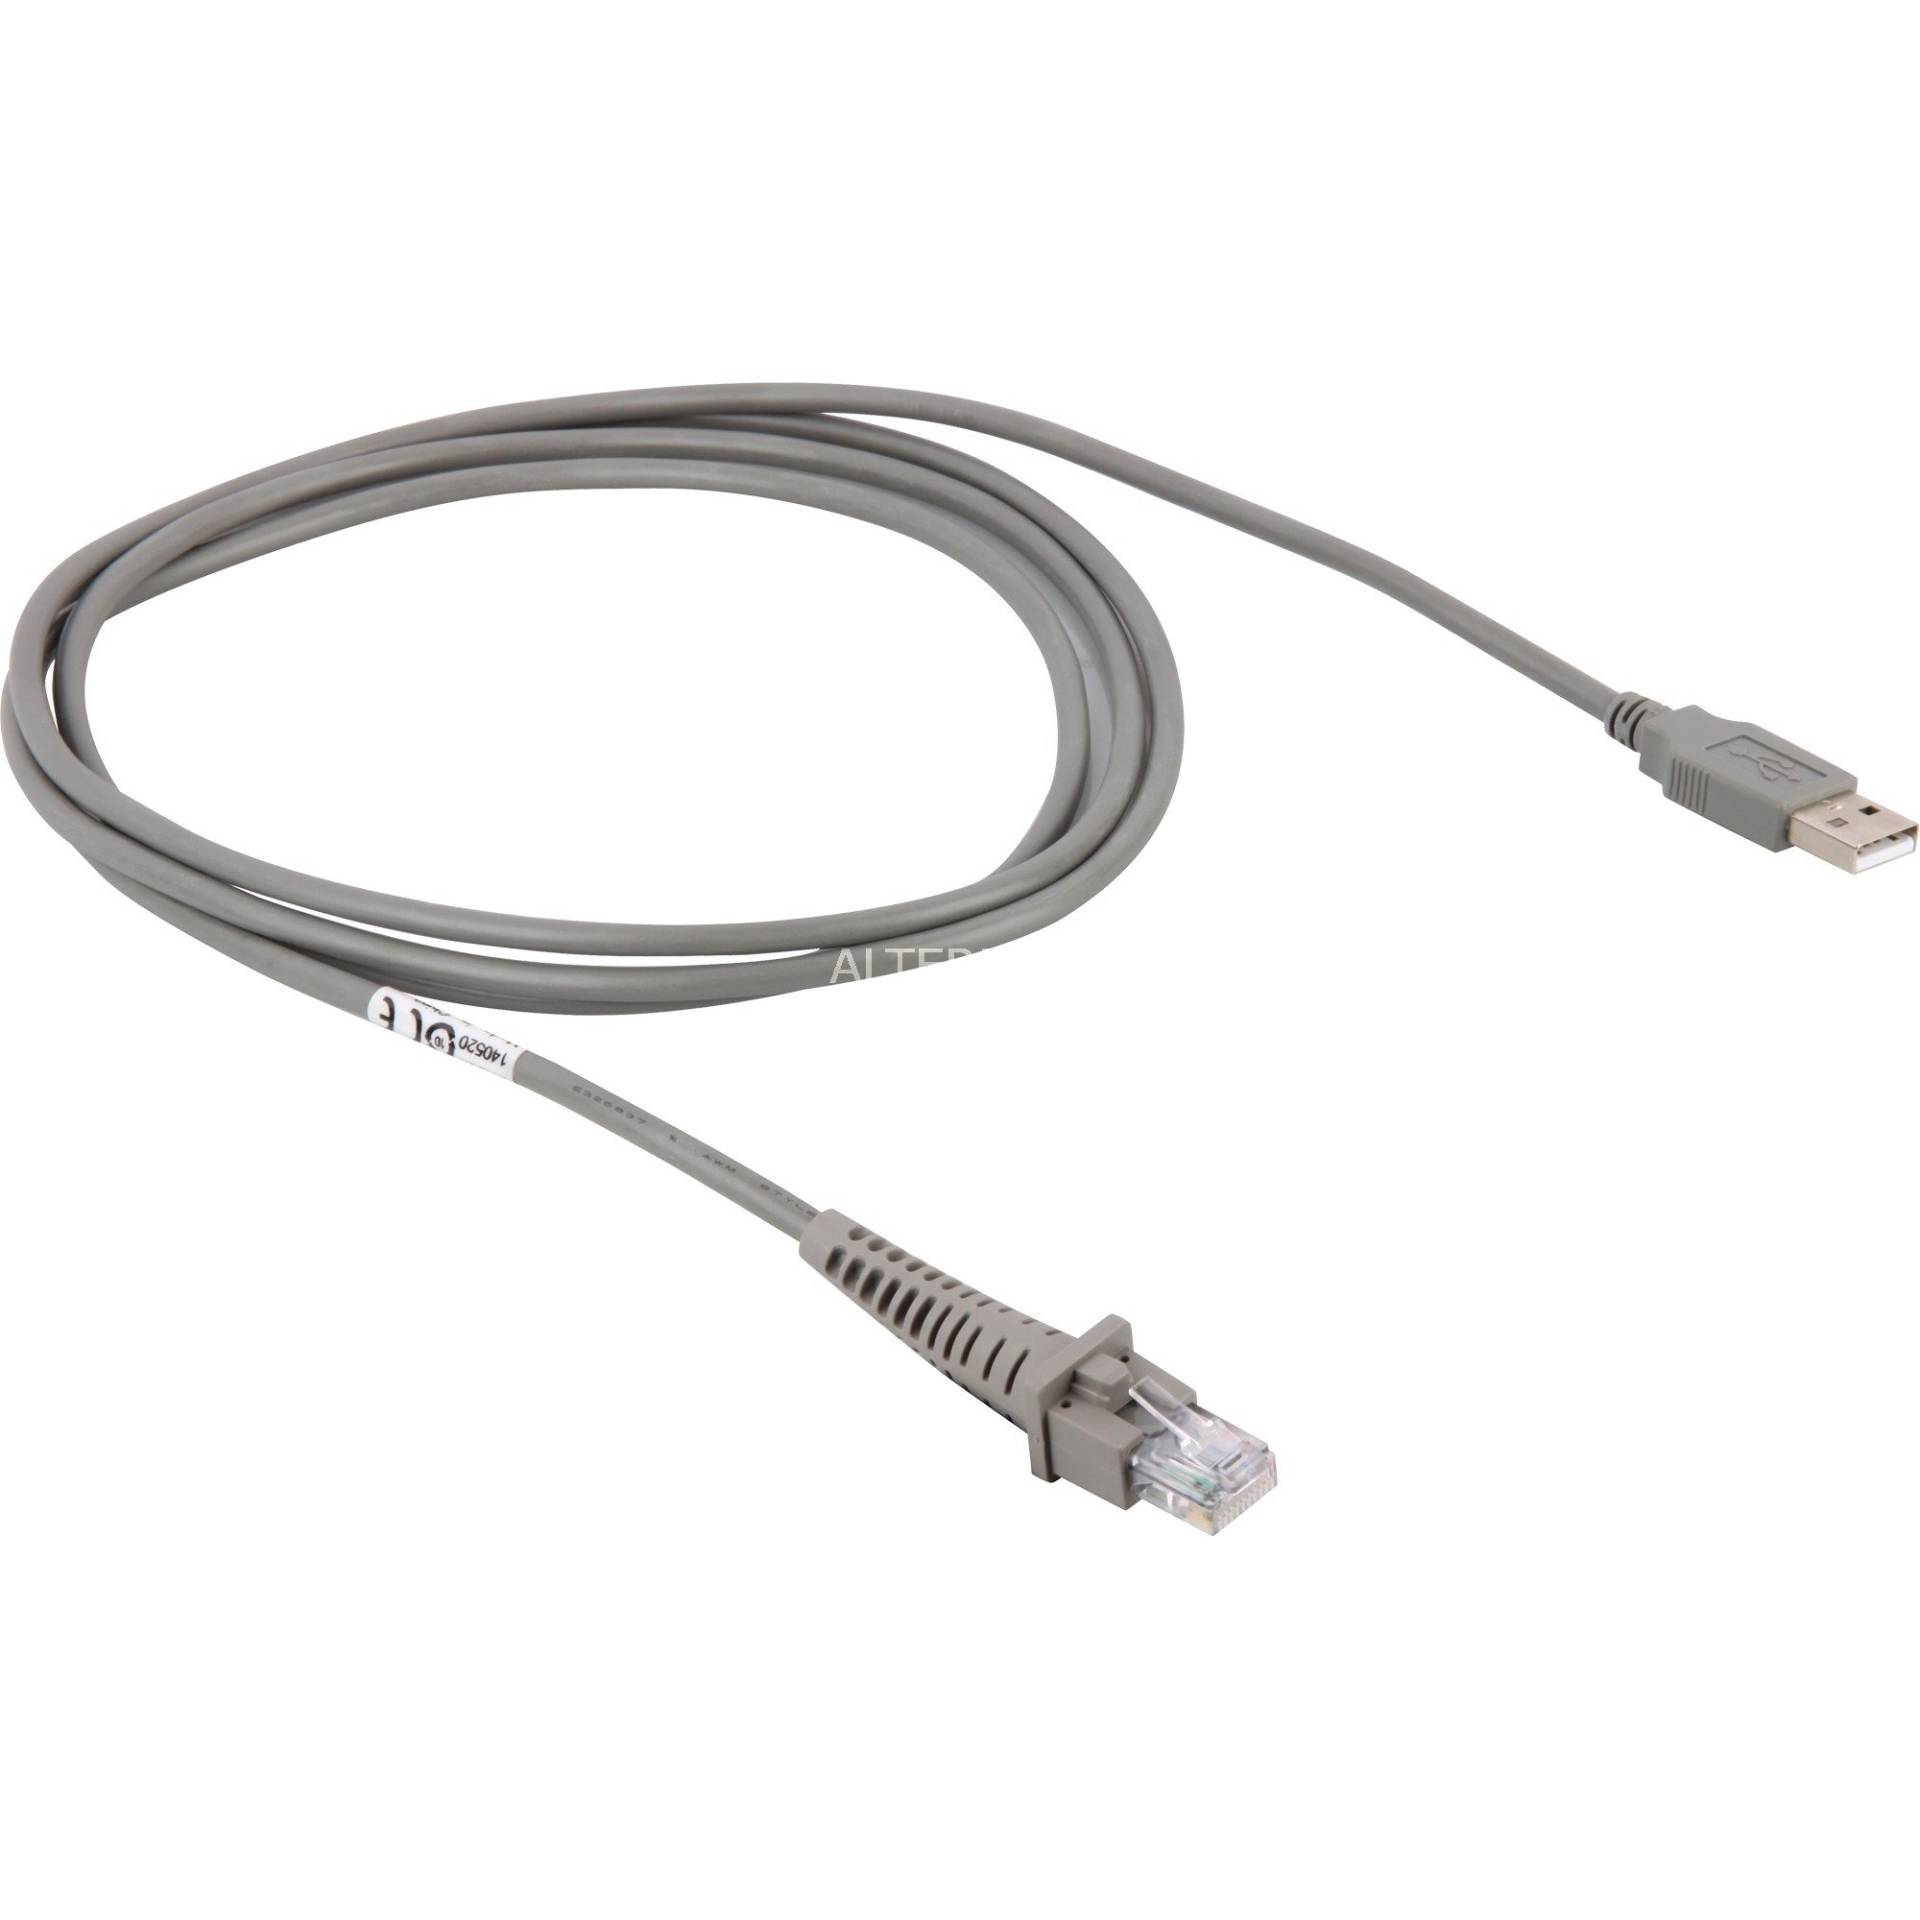 USB-Kabel CAB-426 von DataLogic